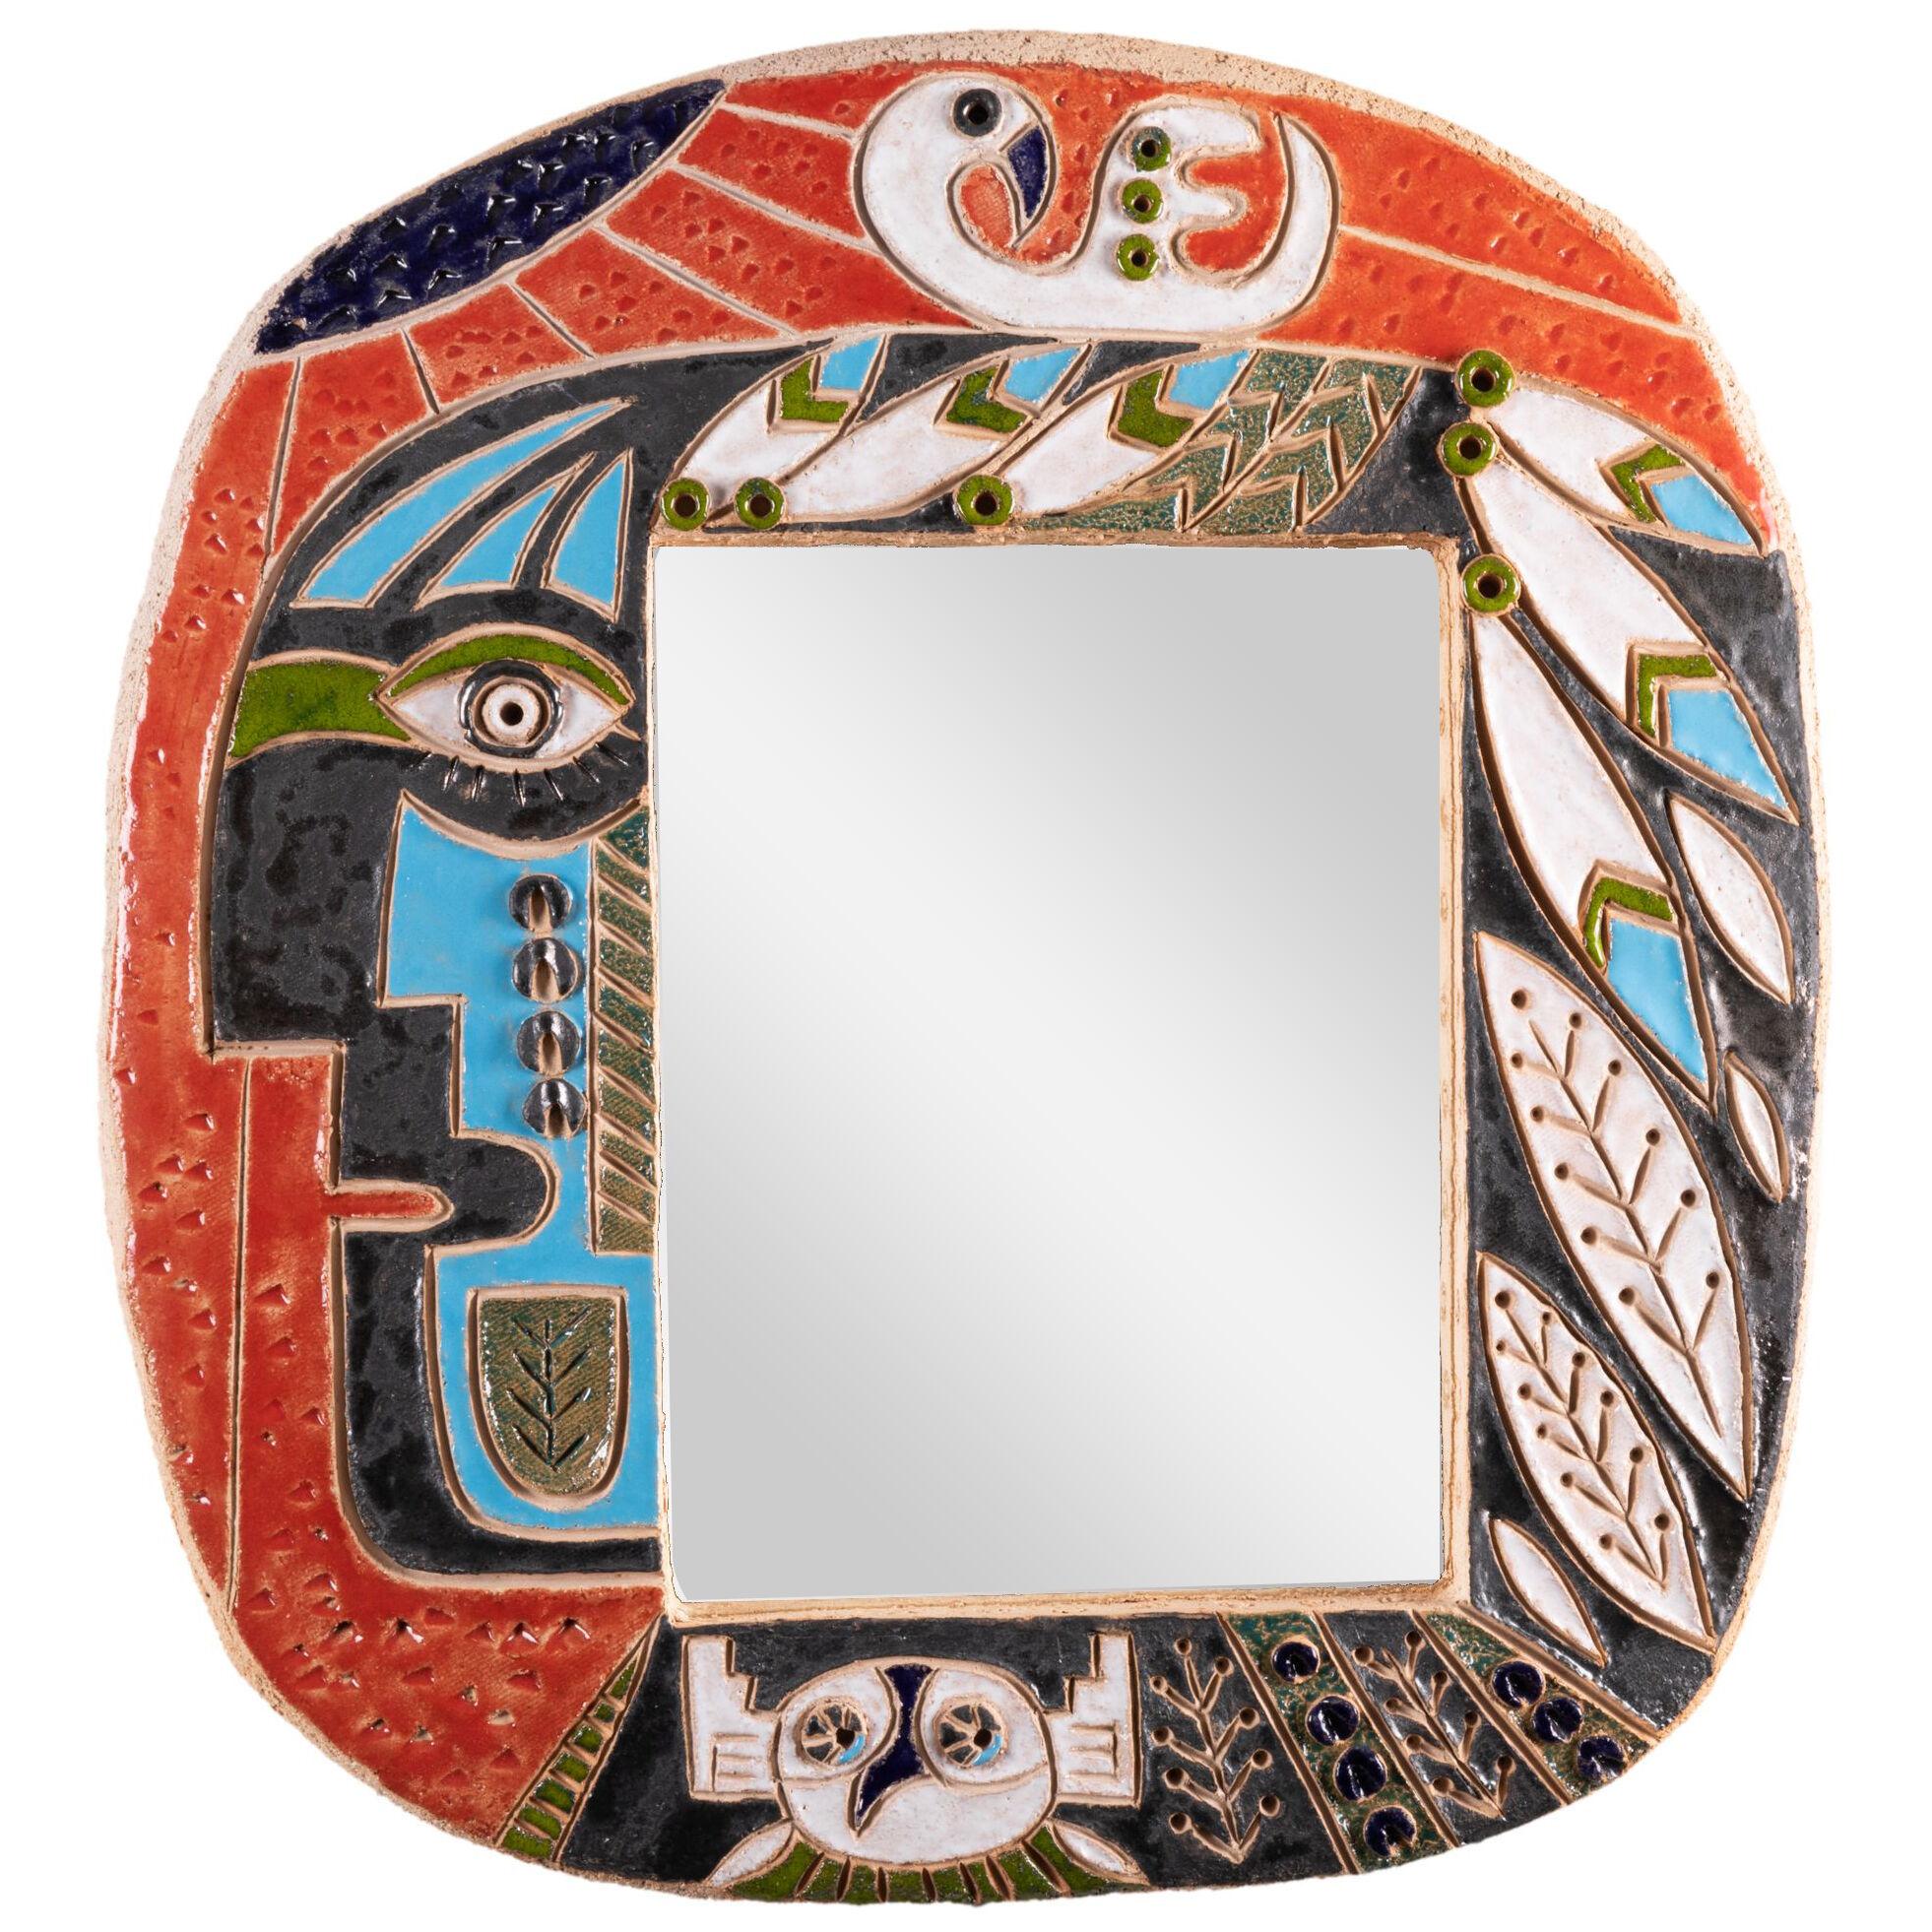  "Kachina" Ceramic Mirror by Nathalie Soufflet,a Telier Curiosa, Vallauris